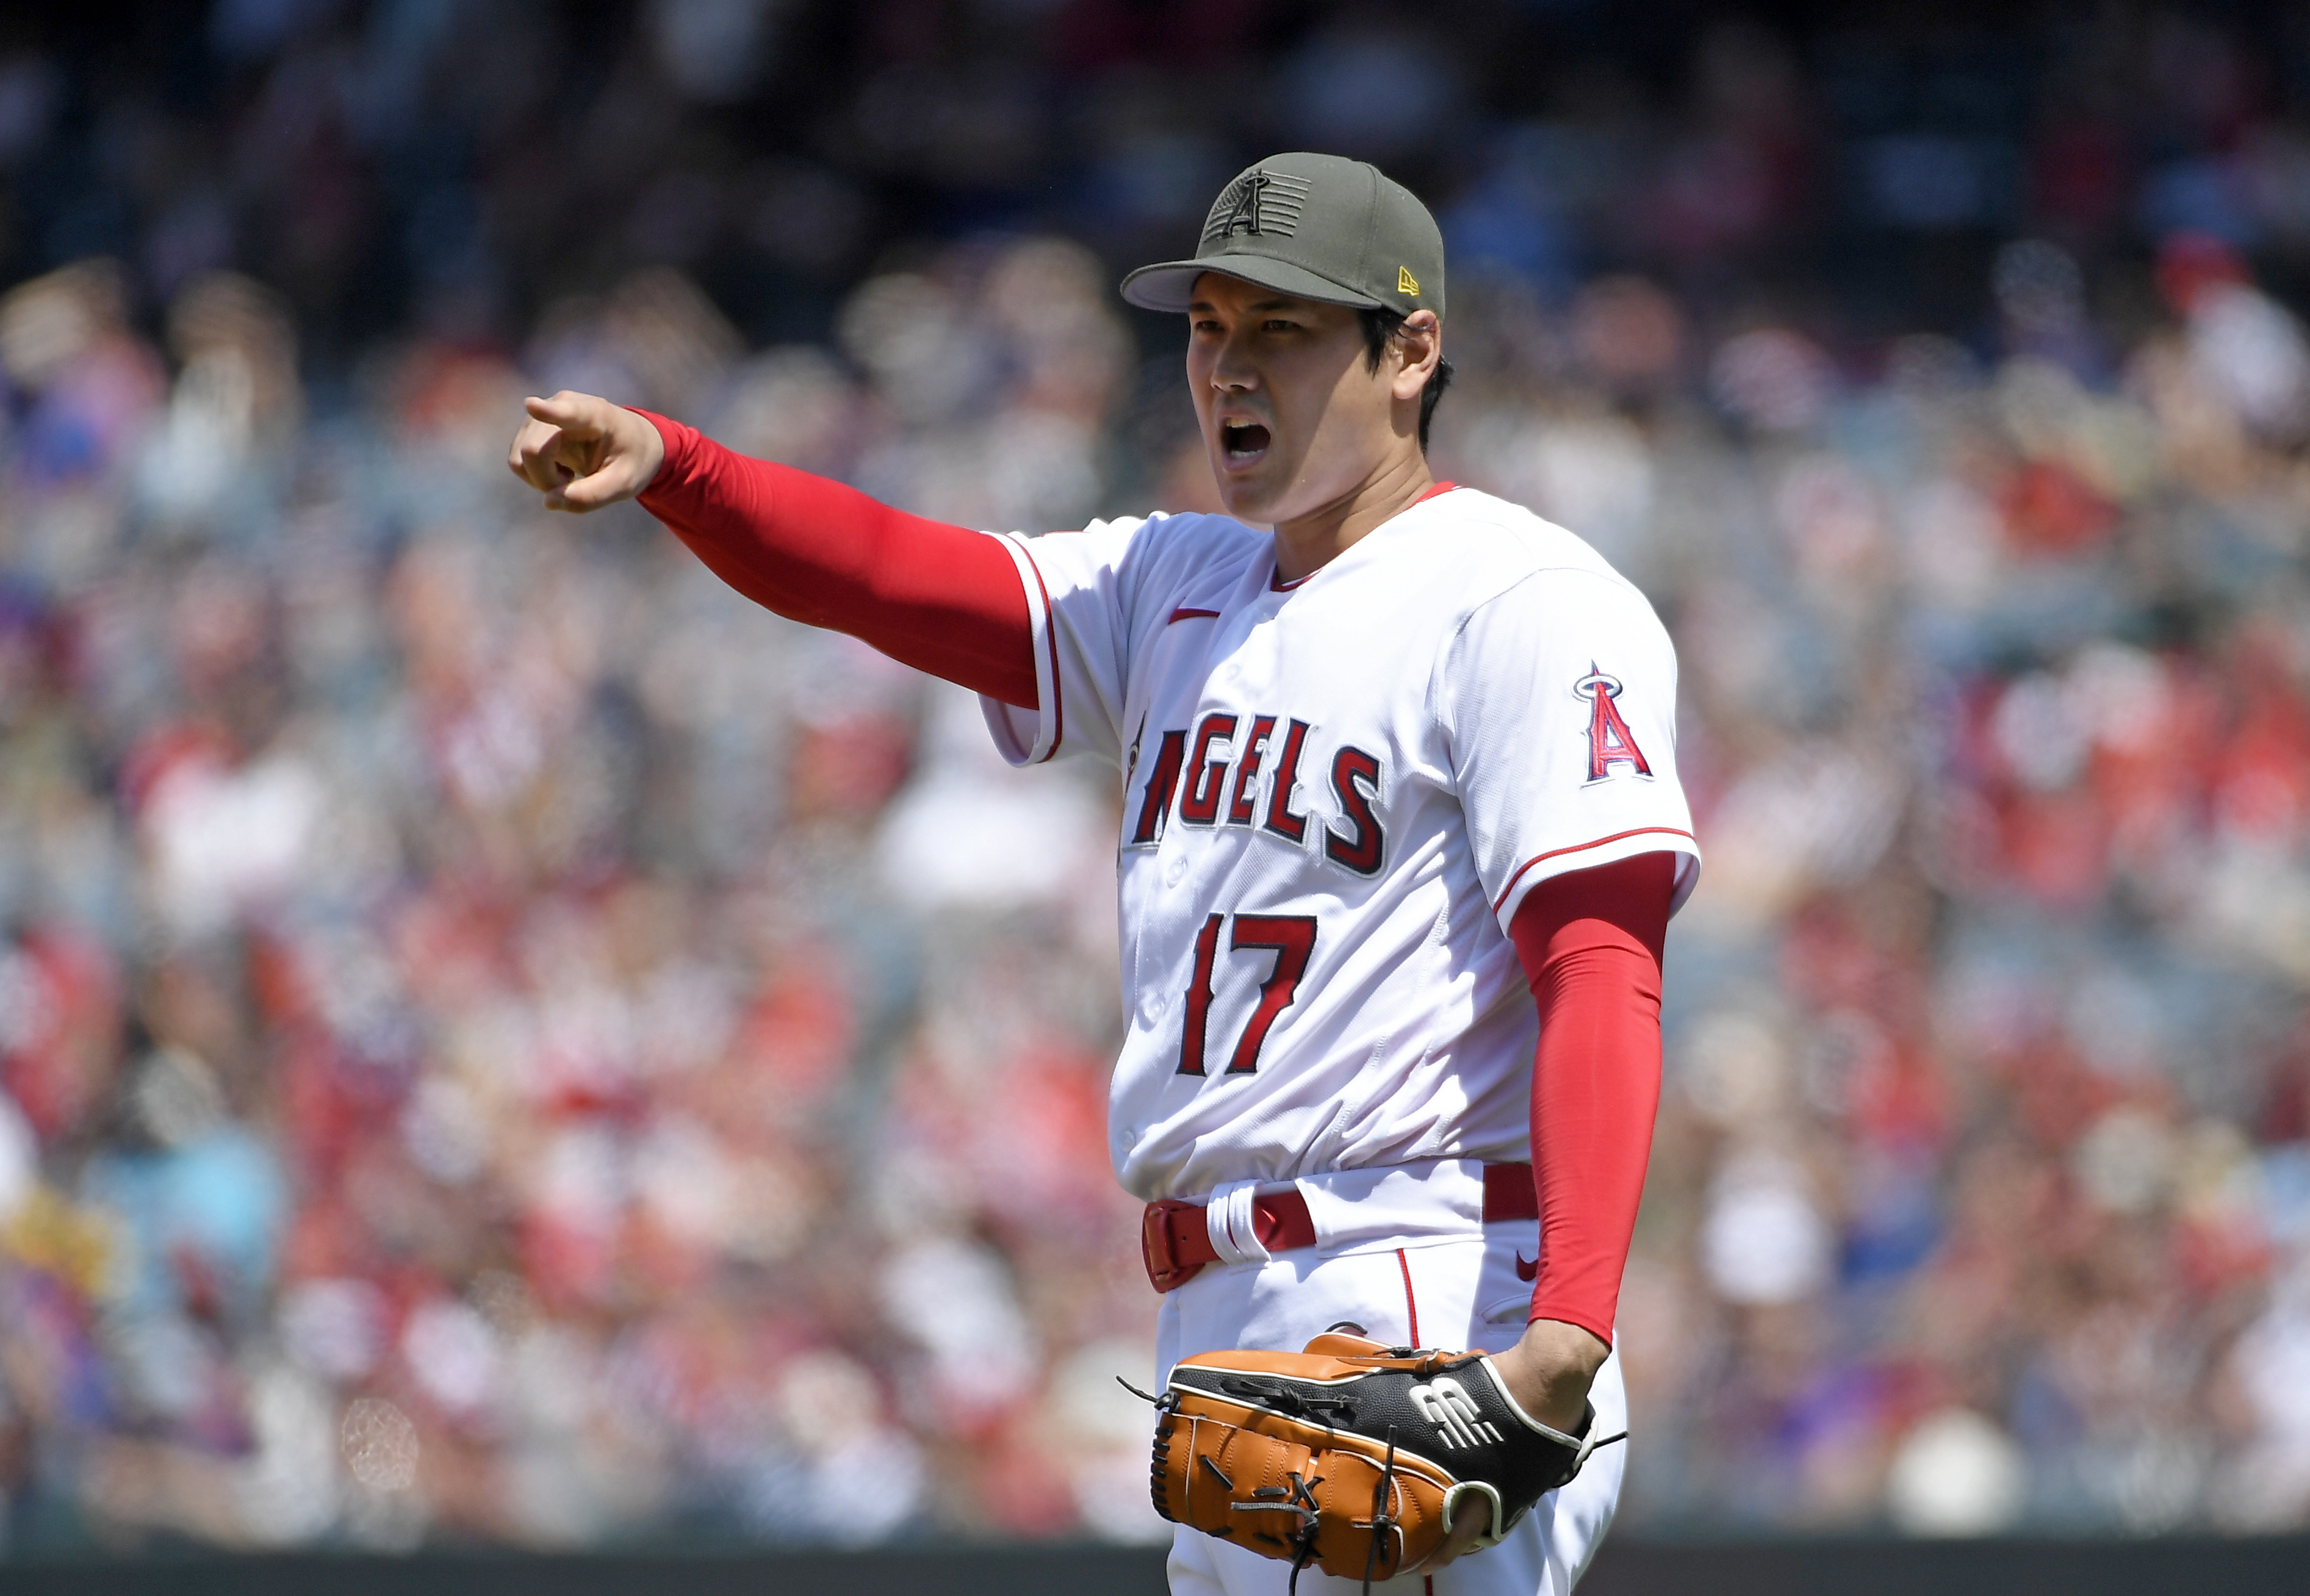 Baseball: Shohei Ohtani earns win, passes mark of Angels great